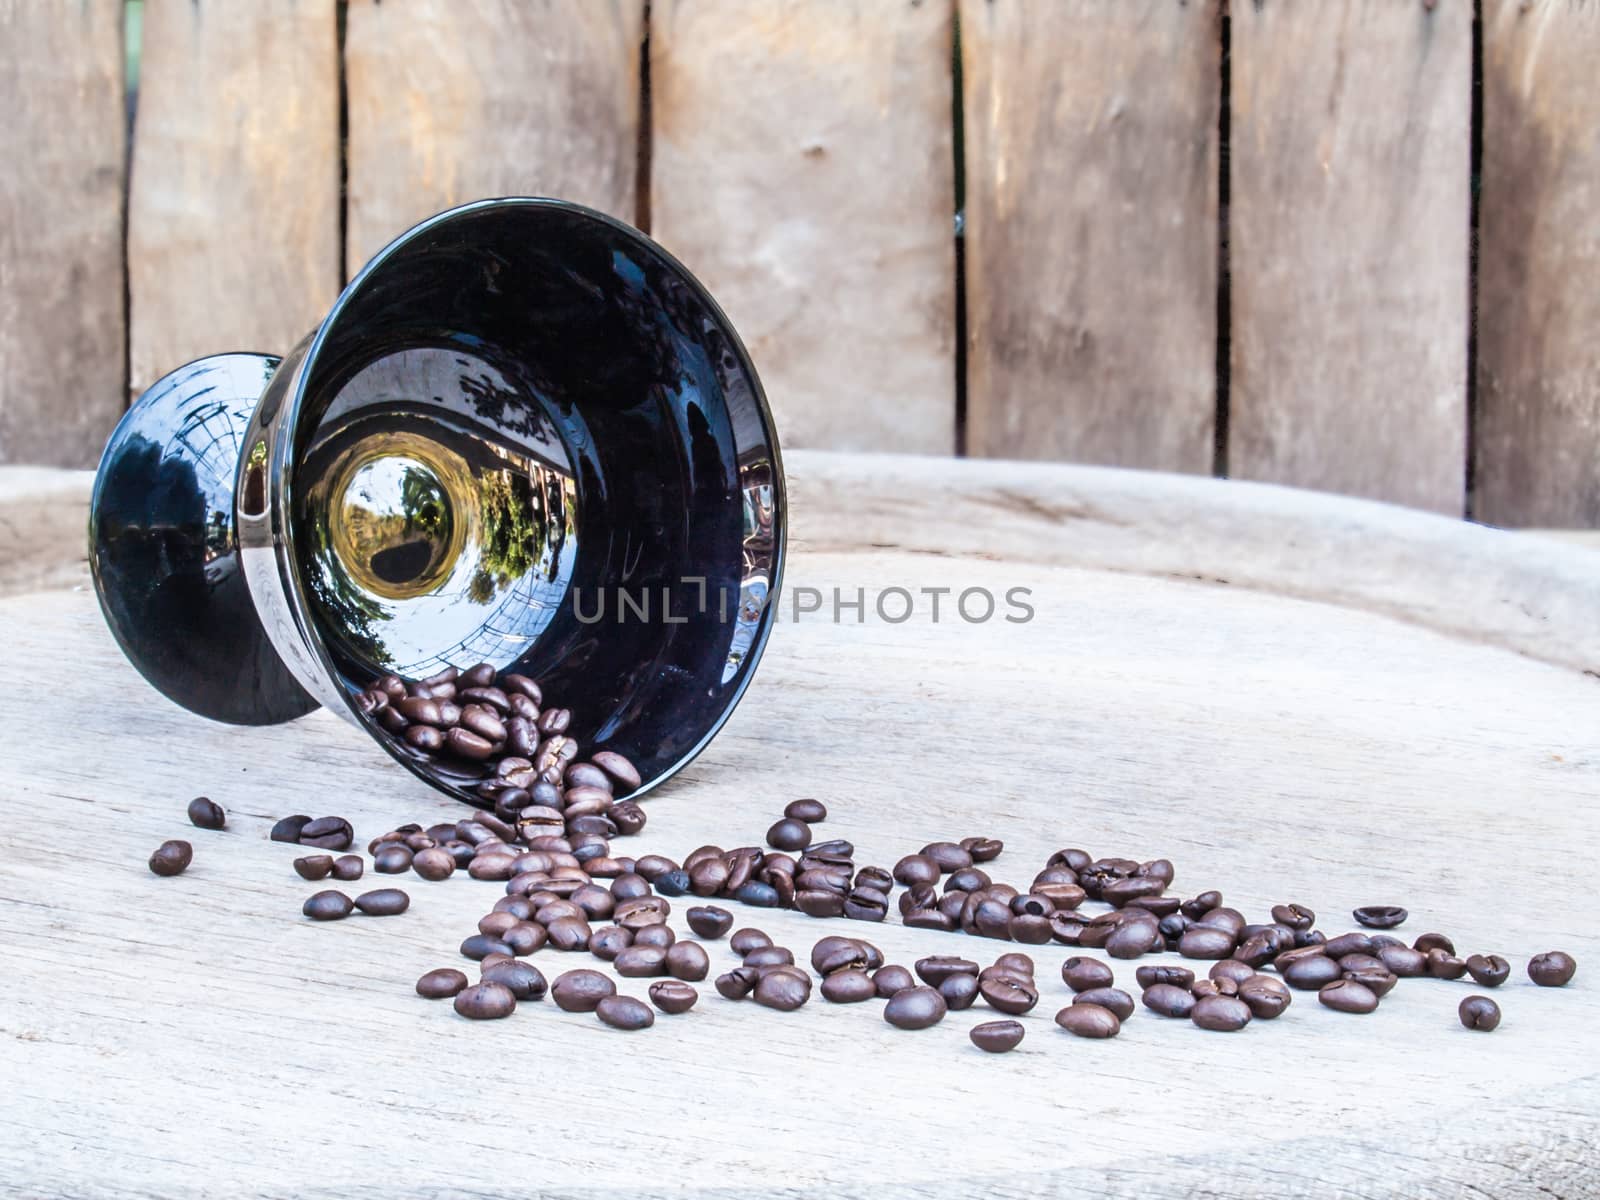 Coffee beans  by wmitrmatr